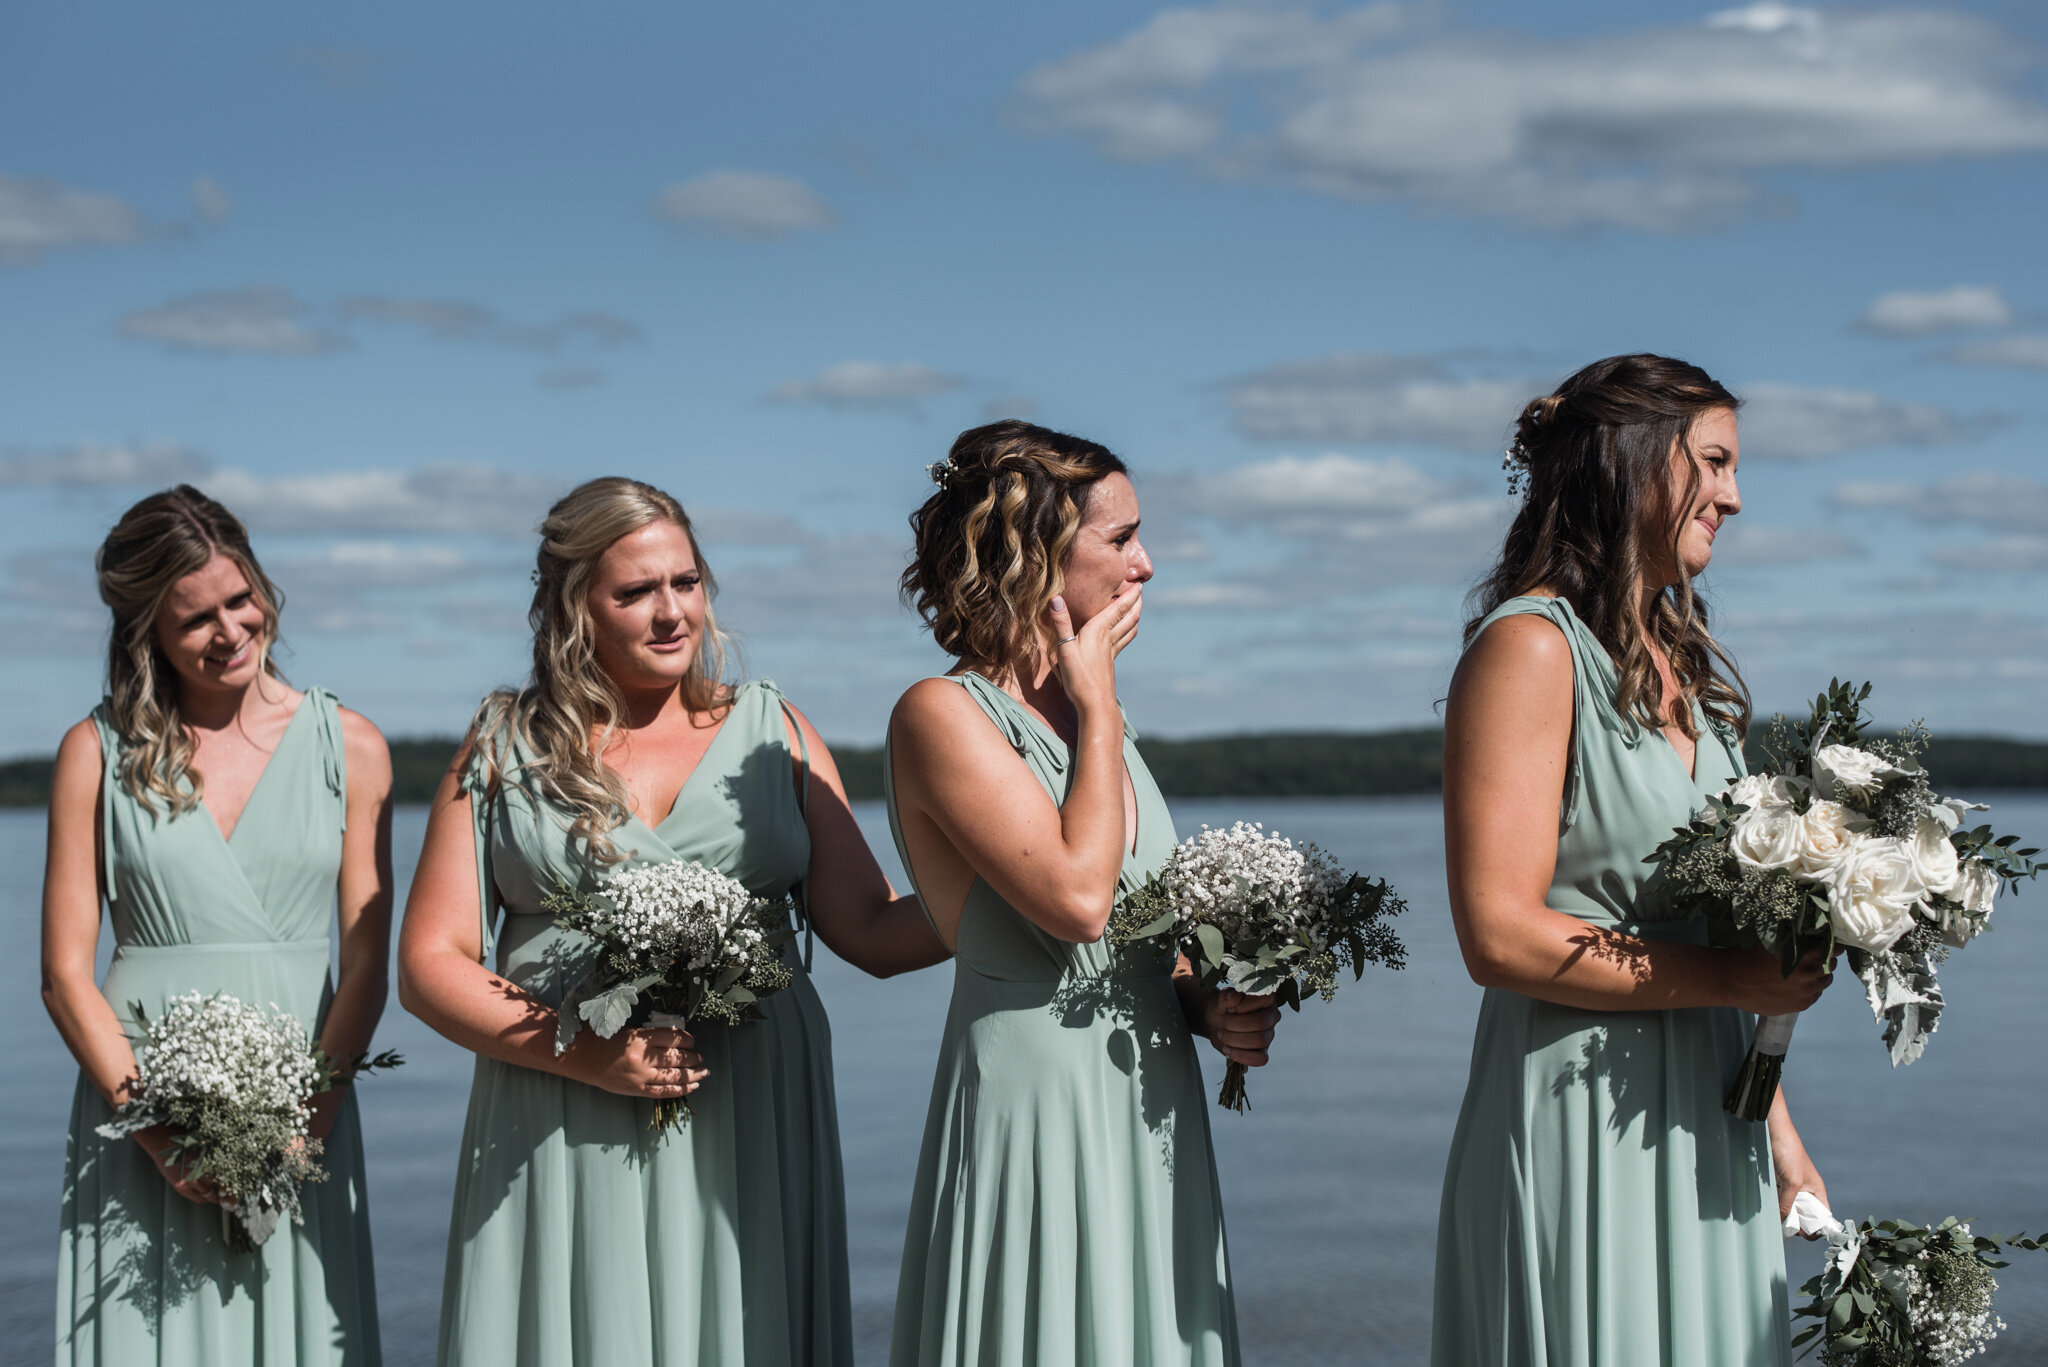 608-emotional-bridesmaids-during-lake-outdoor-wedding-ceremony.jpg